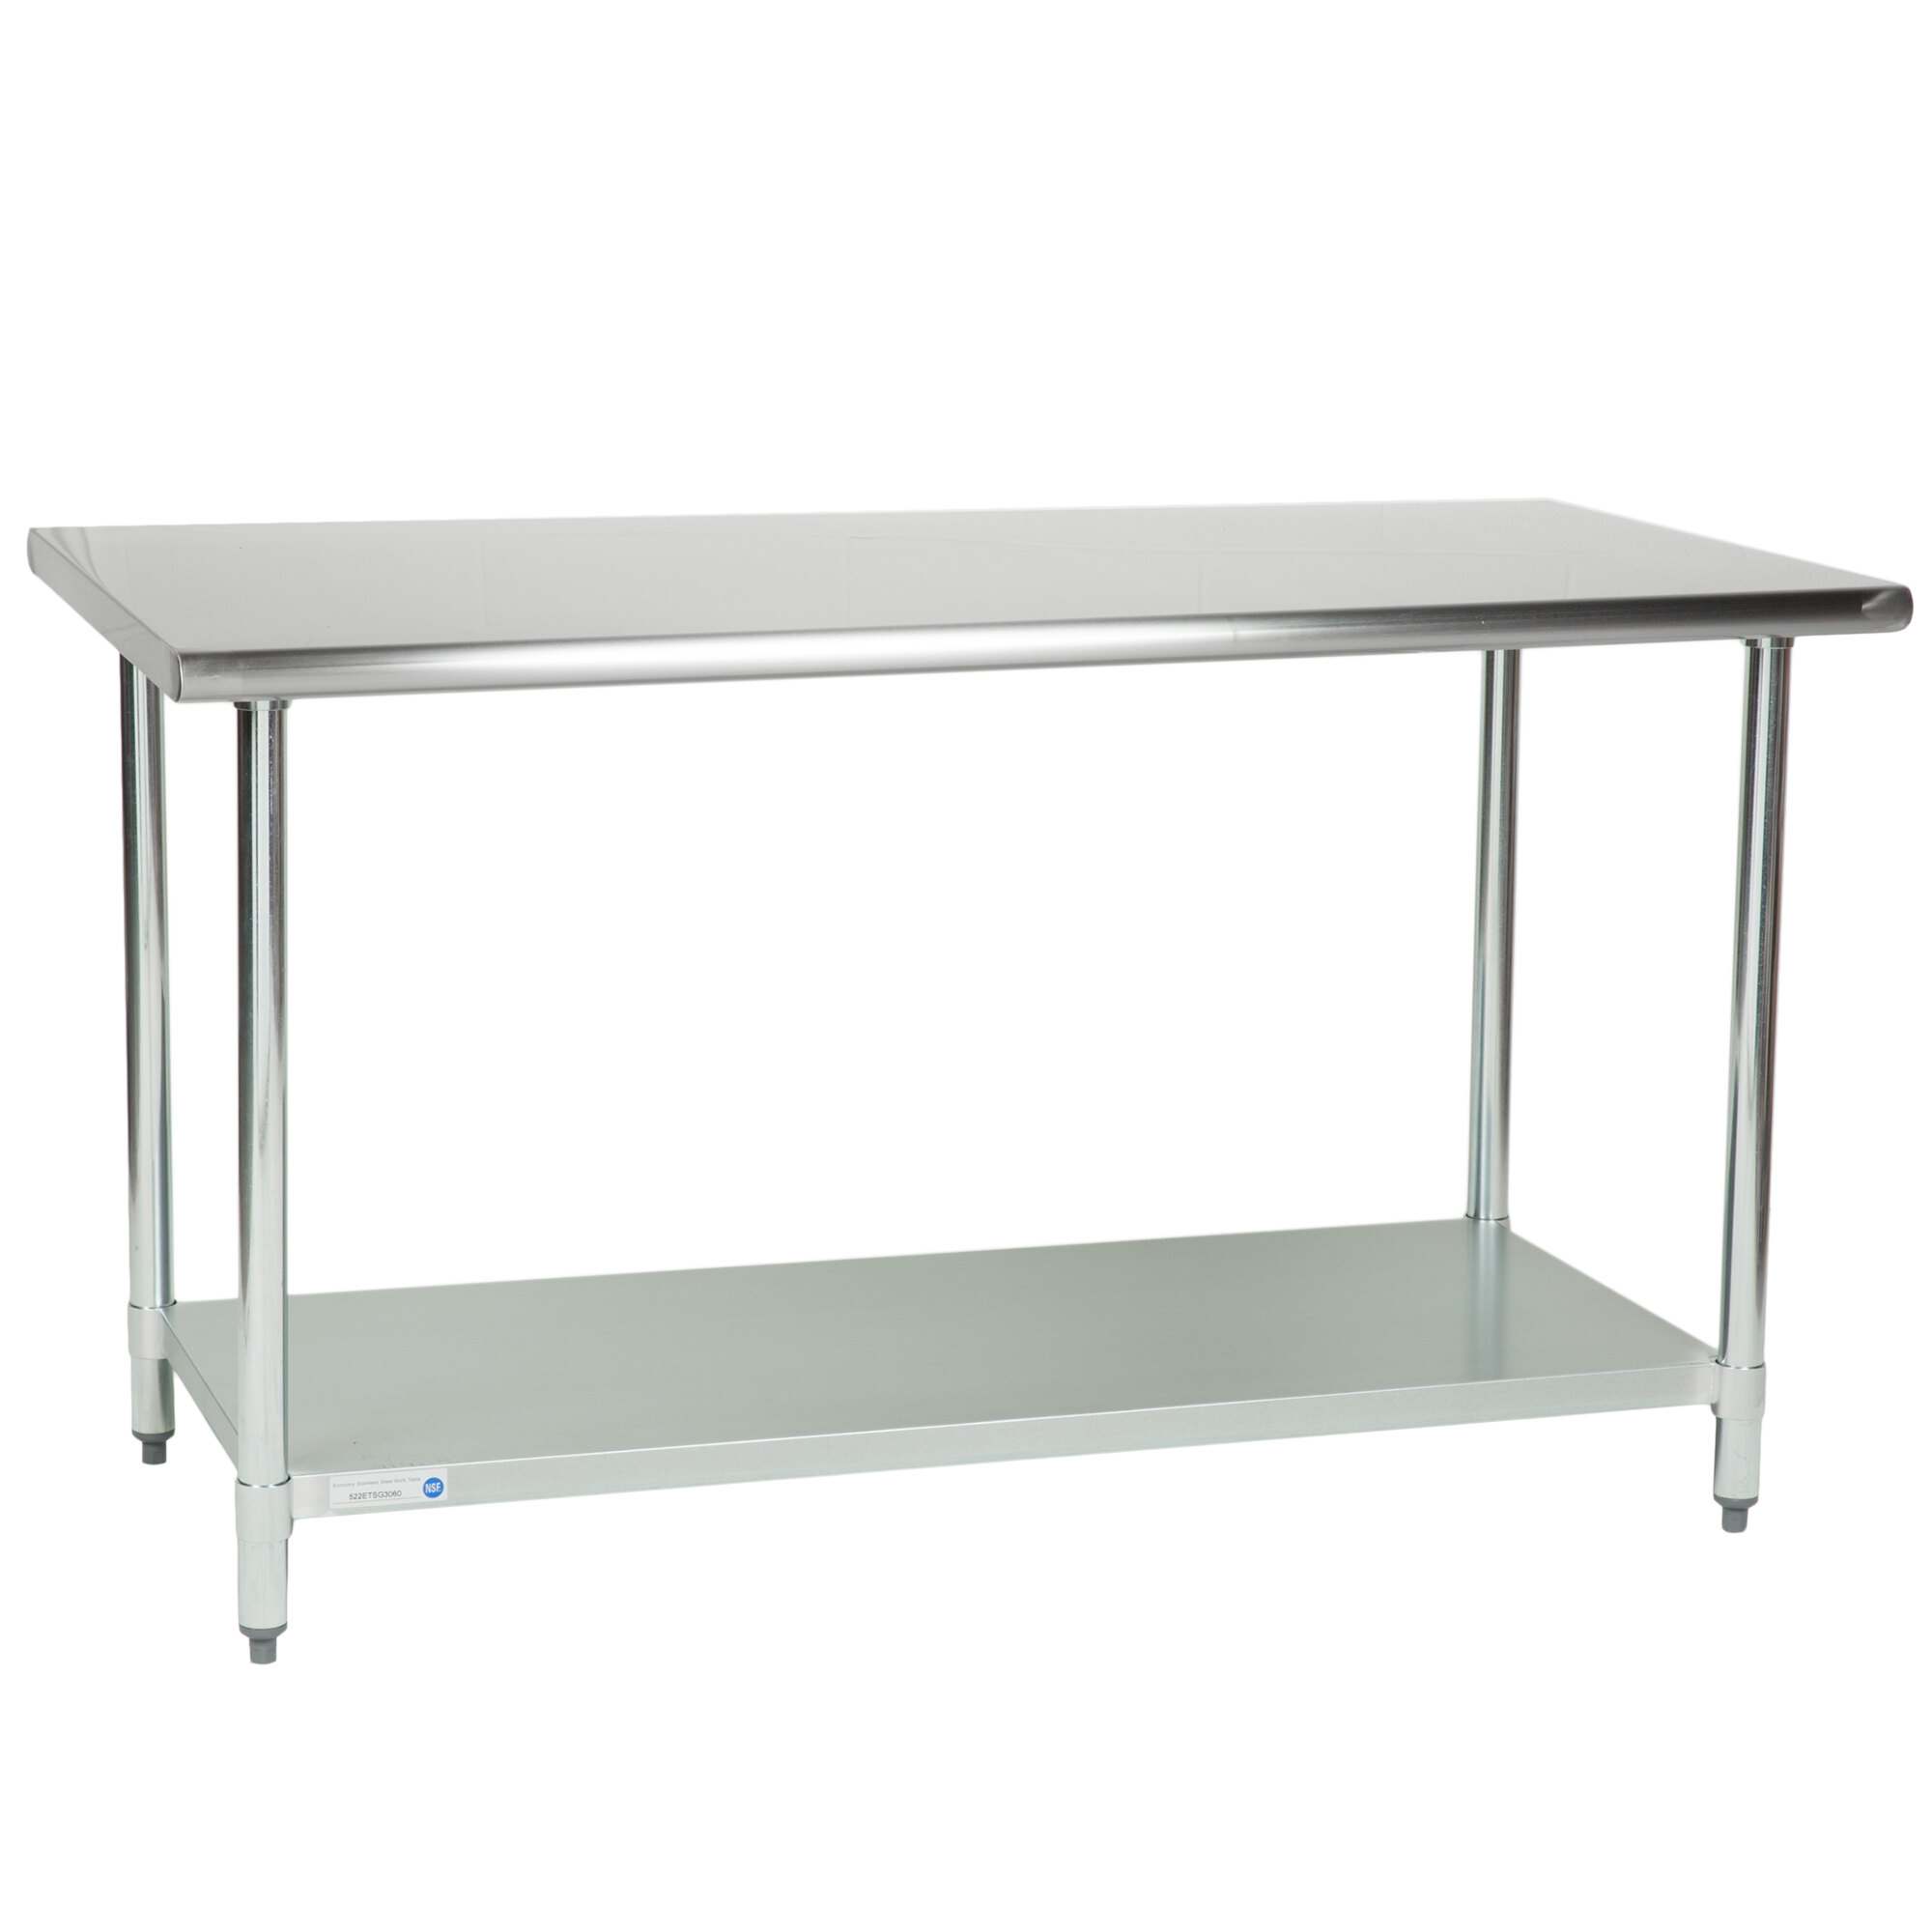 Steelton 30" x 60" 18 Gauge 430 Stainless Steel Work Table with Undershelf Stainless Steel Work Table With Undershelf